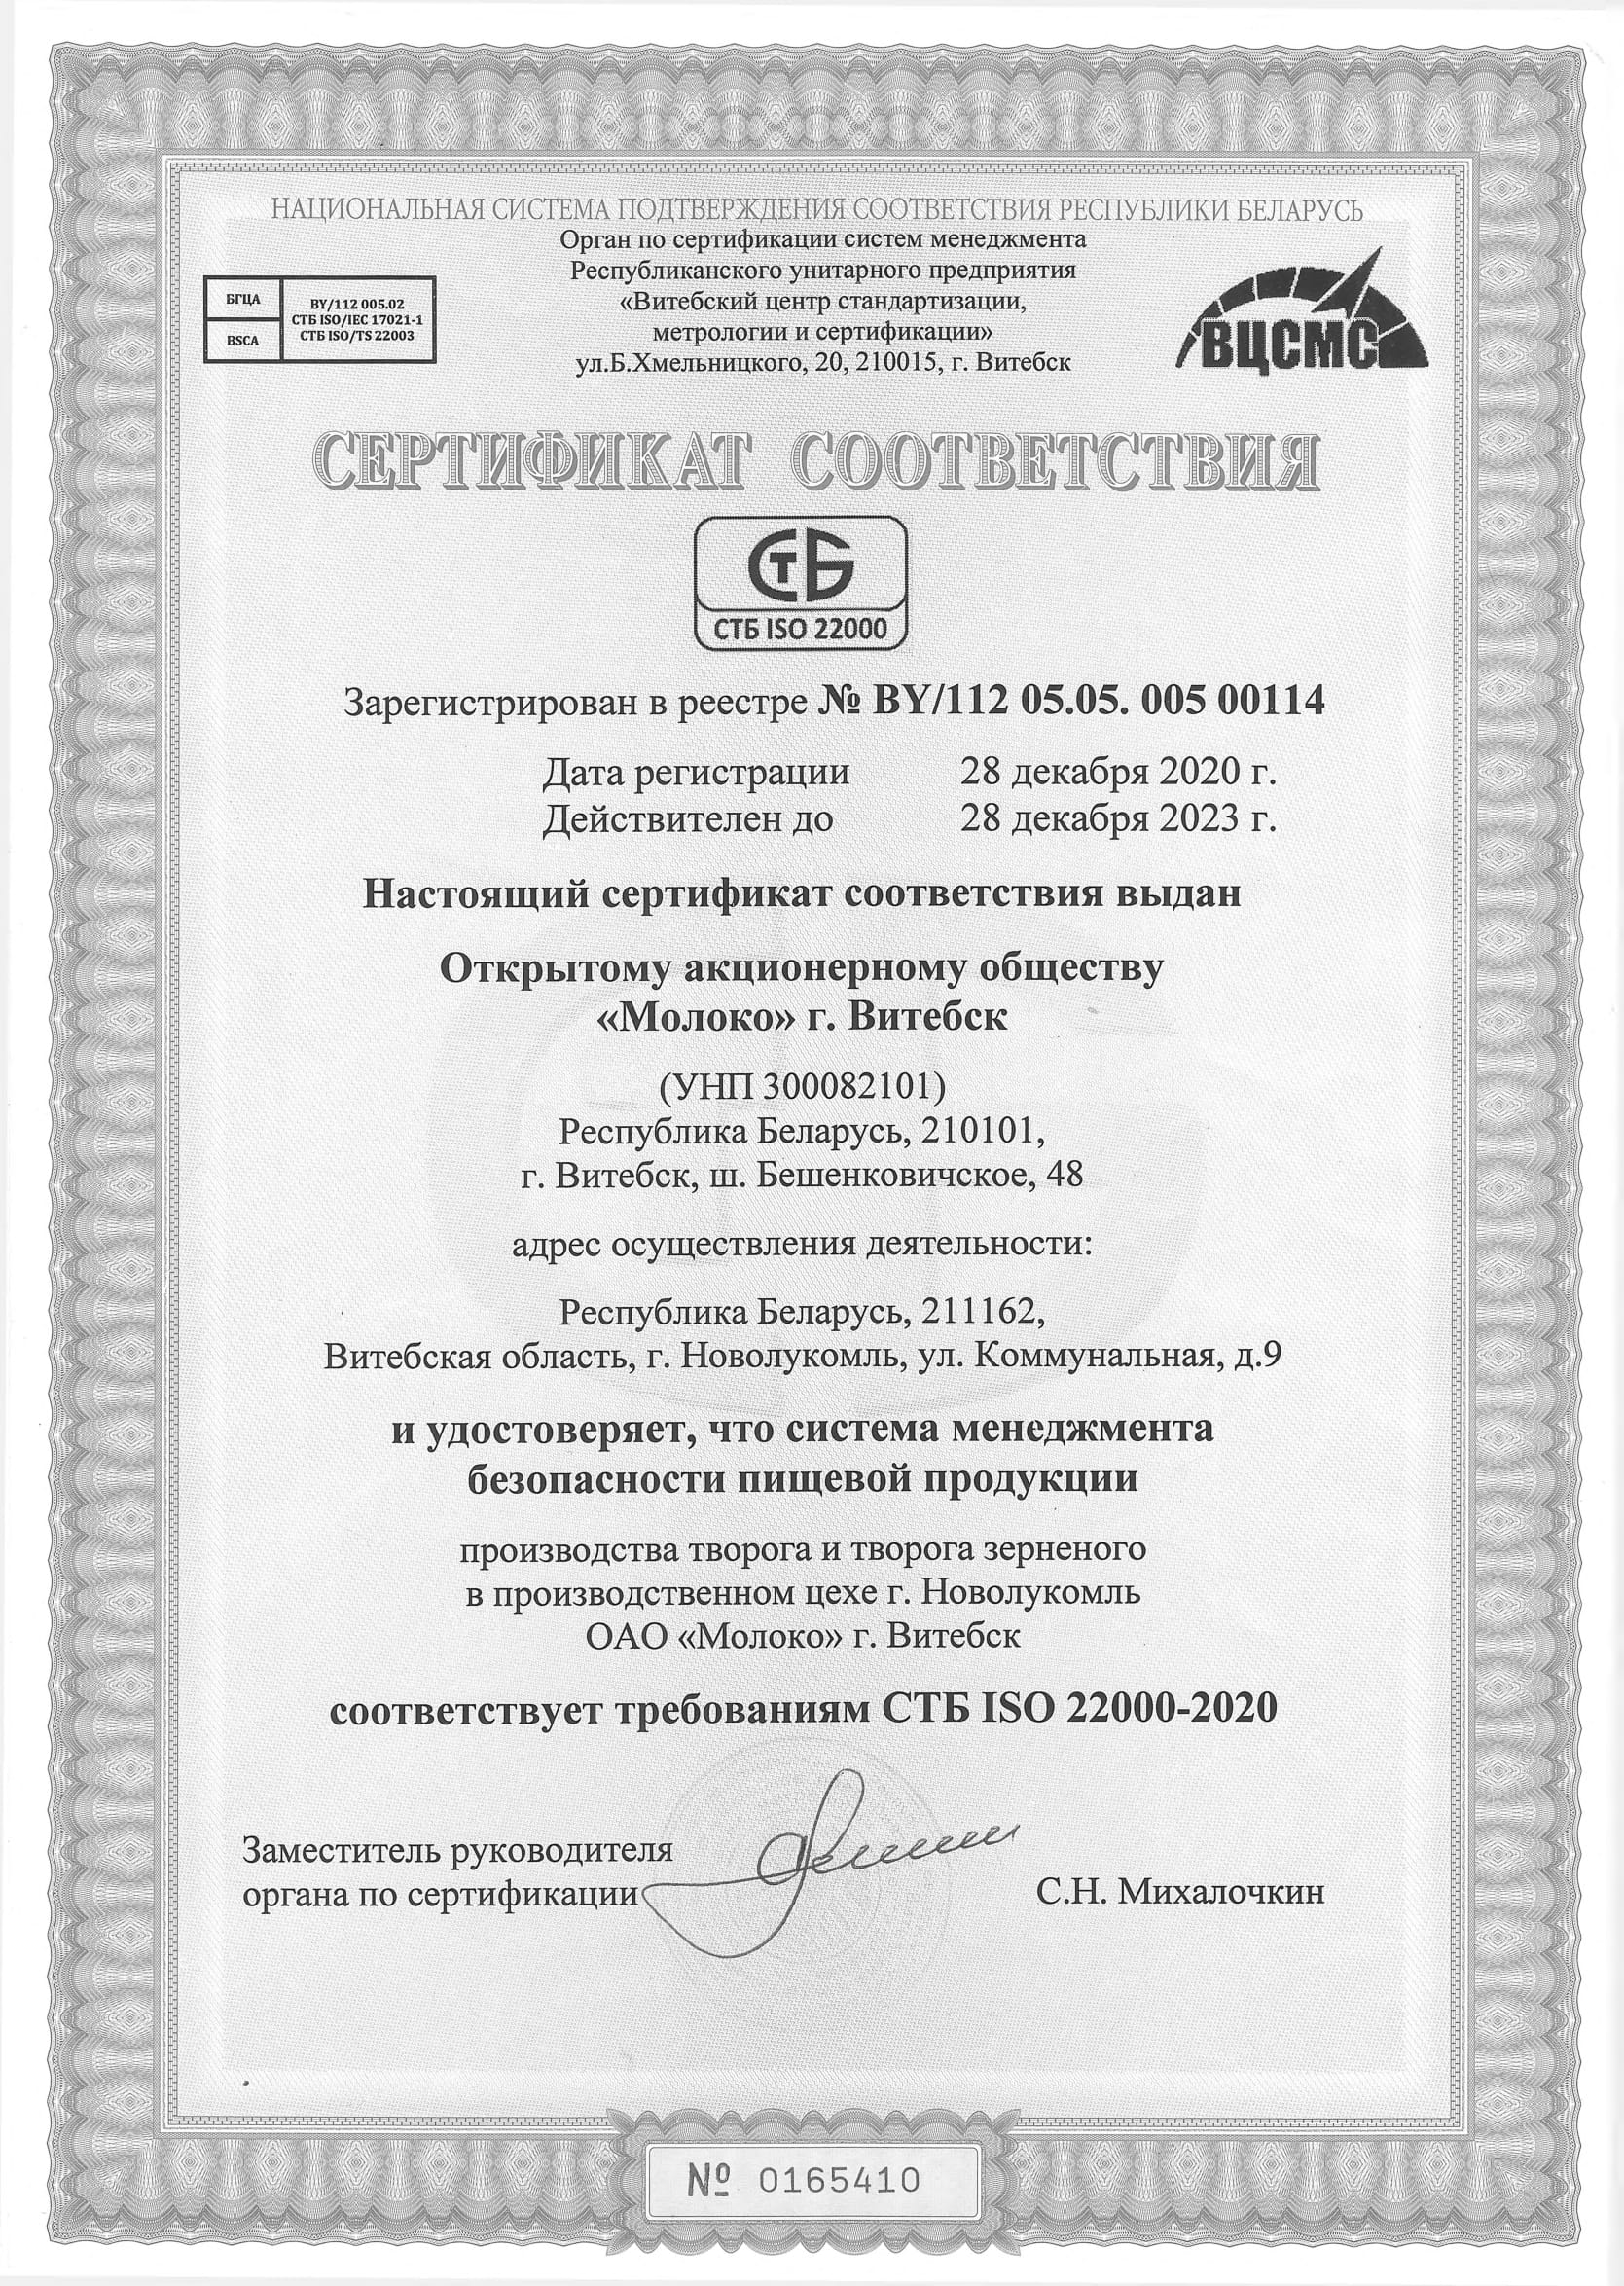 Certificate of conformity STB ISO 22000-2020 (Novolukoml)